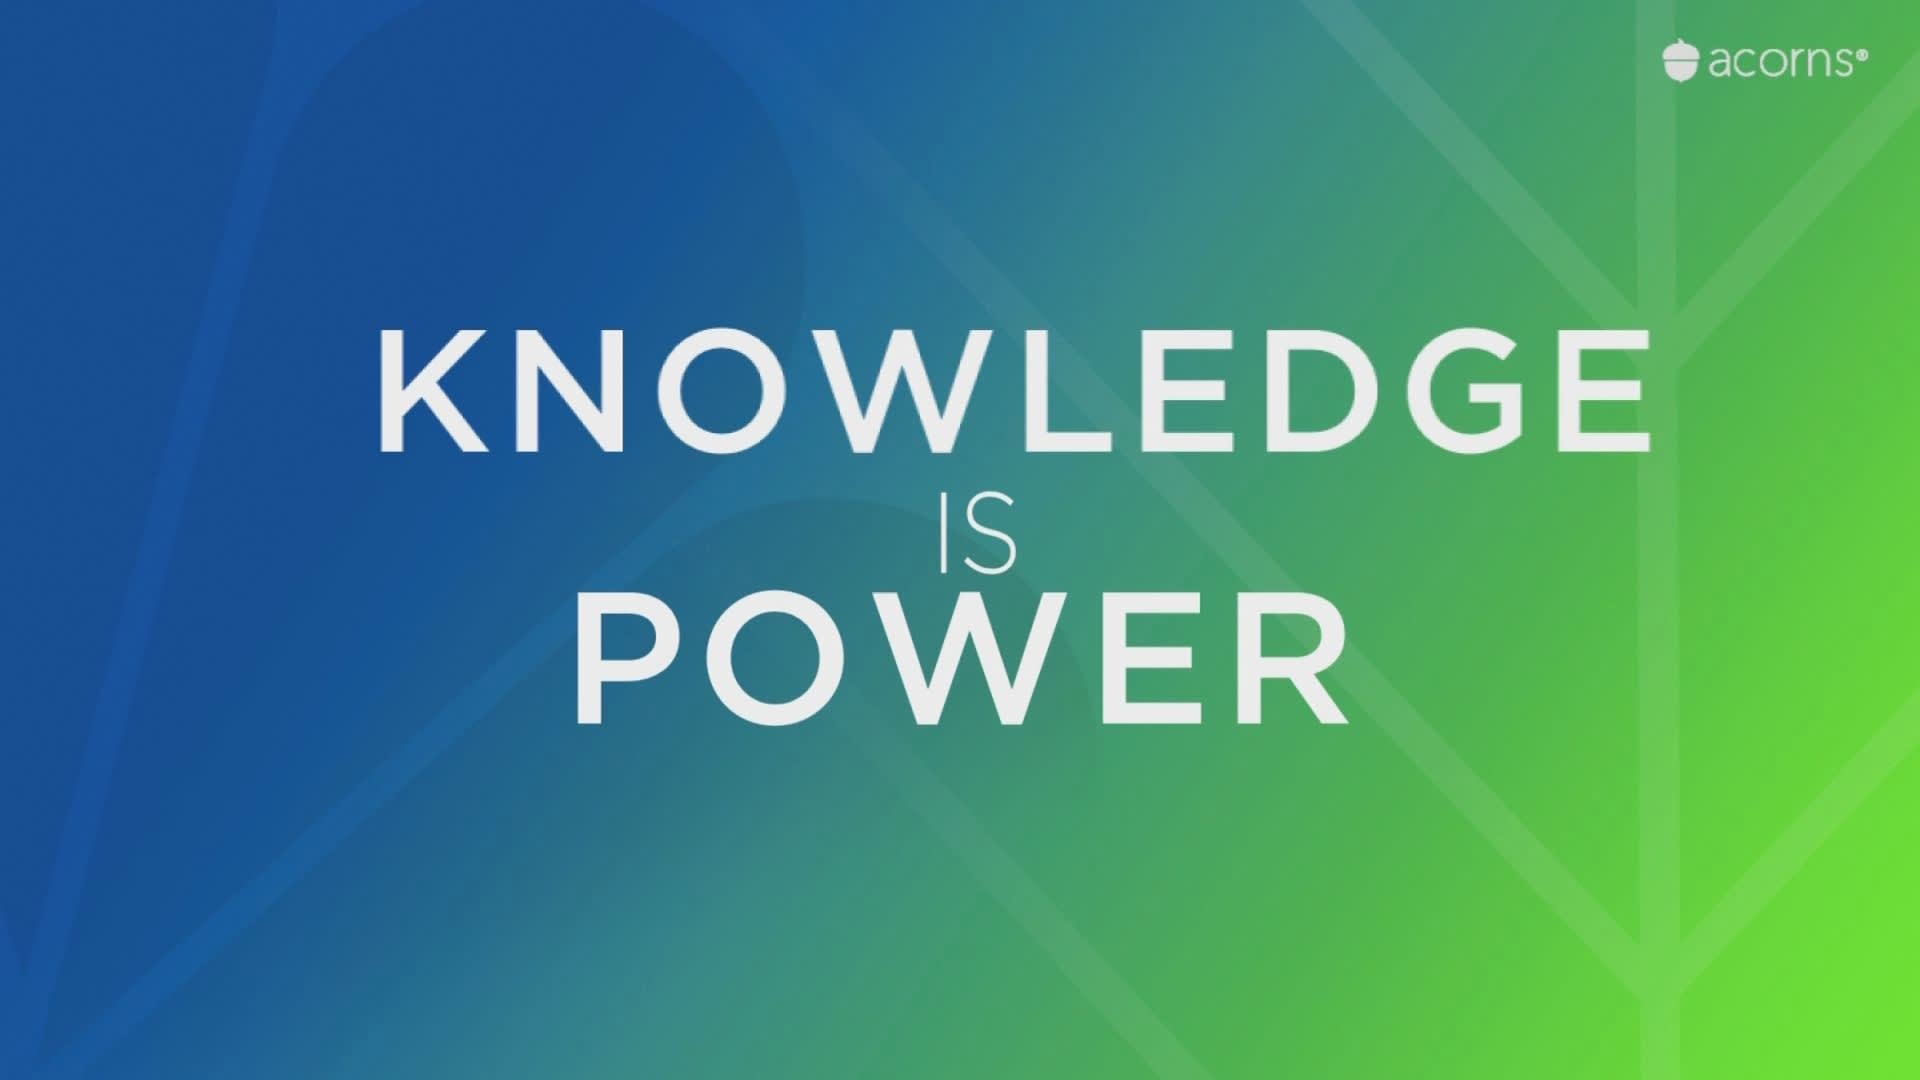 Napkin Finance CEO - 'Knowledge is power'